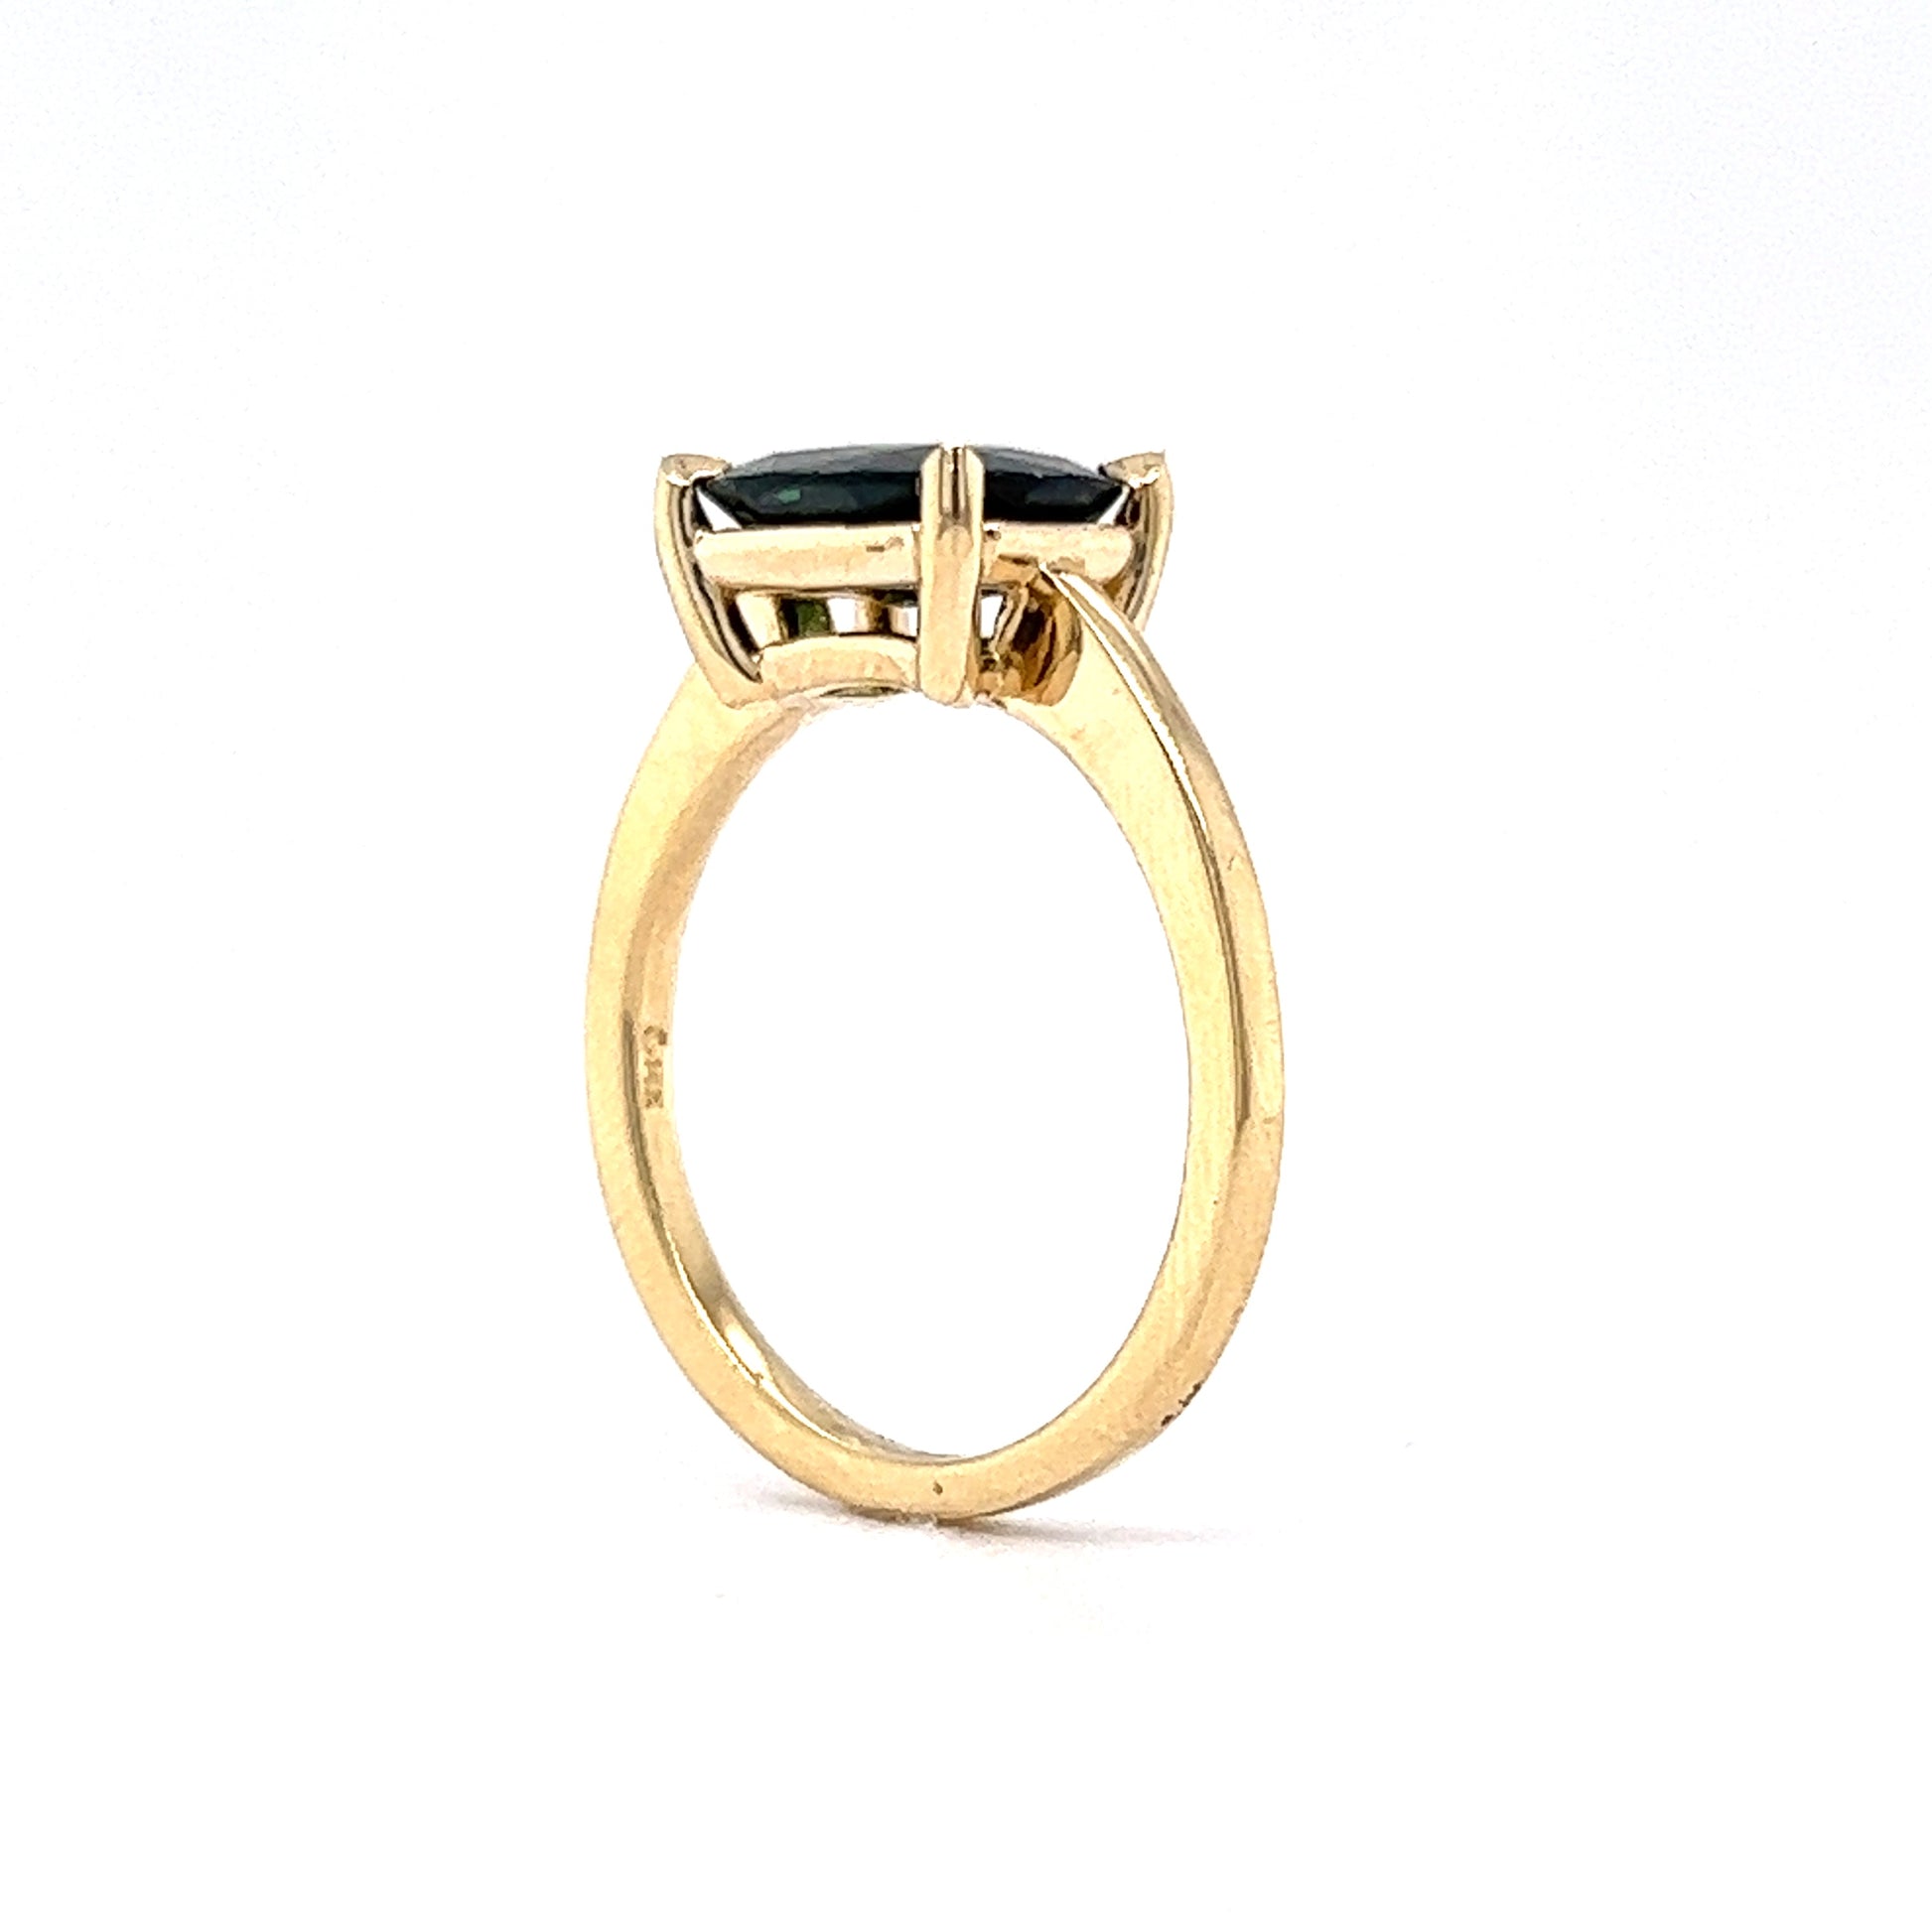 2.39 Cushion Cut Green Tourmaline Engagement Ring in 14k Yellow GoldComposition: 14 Karat Yellow Gold Ring Size: 7.0 Total Gram Weight: 3.5 g Inscription: 14K
      